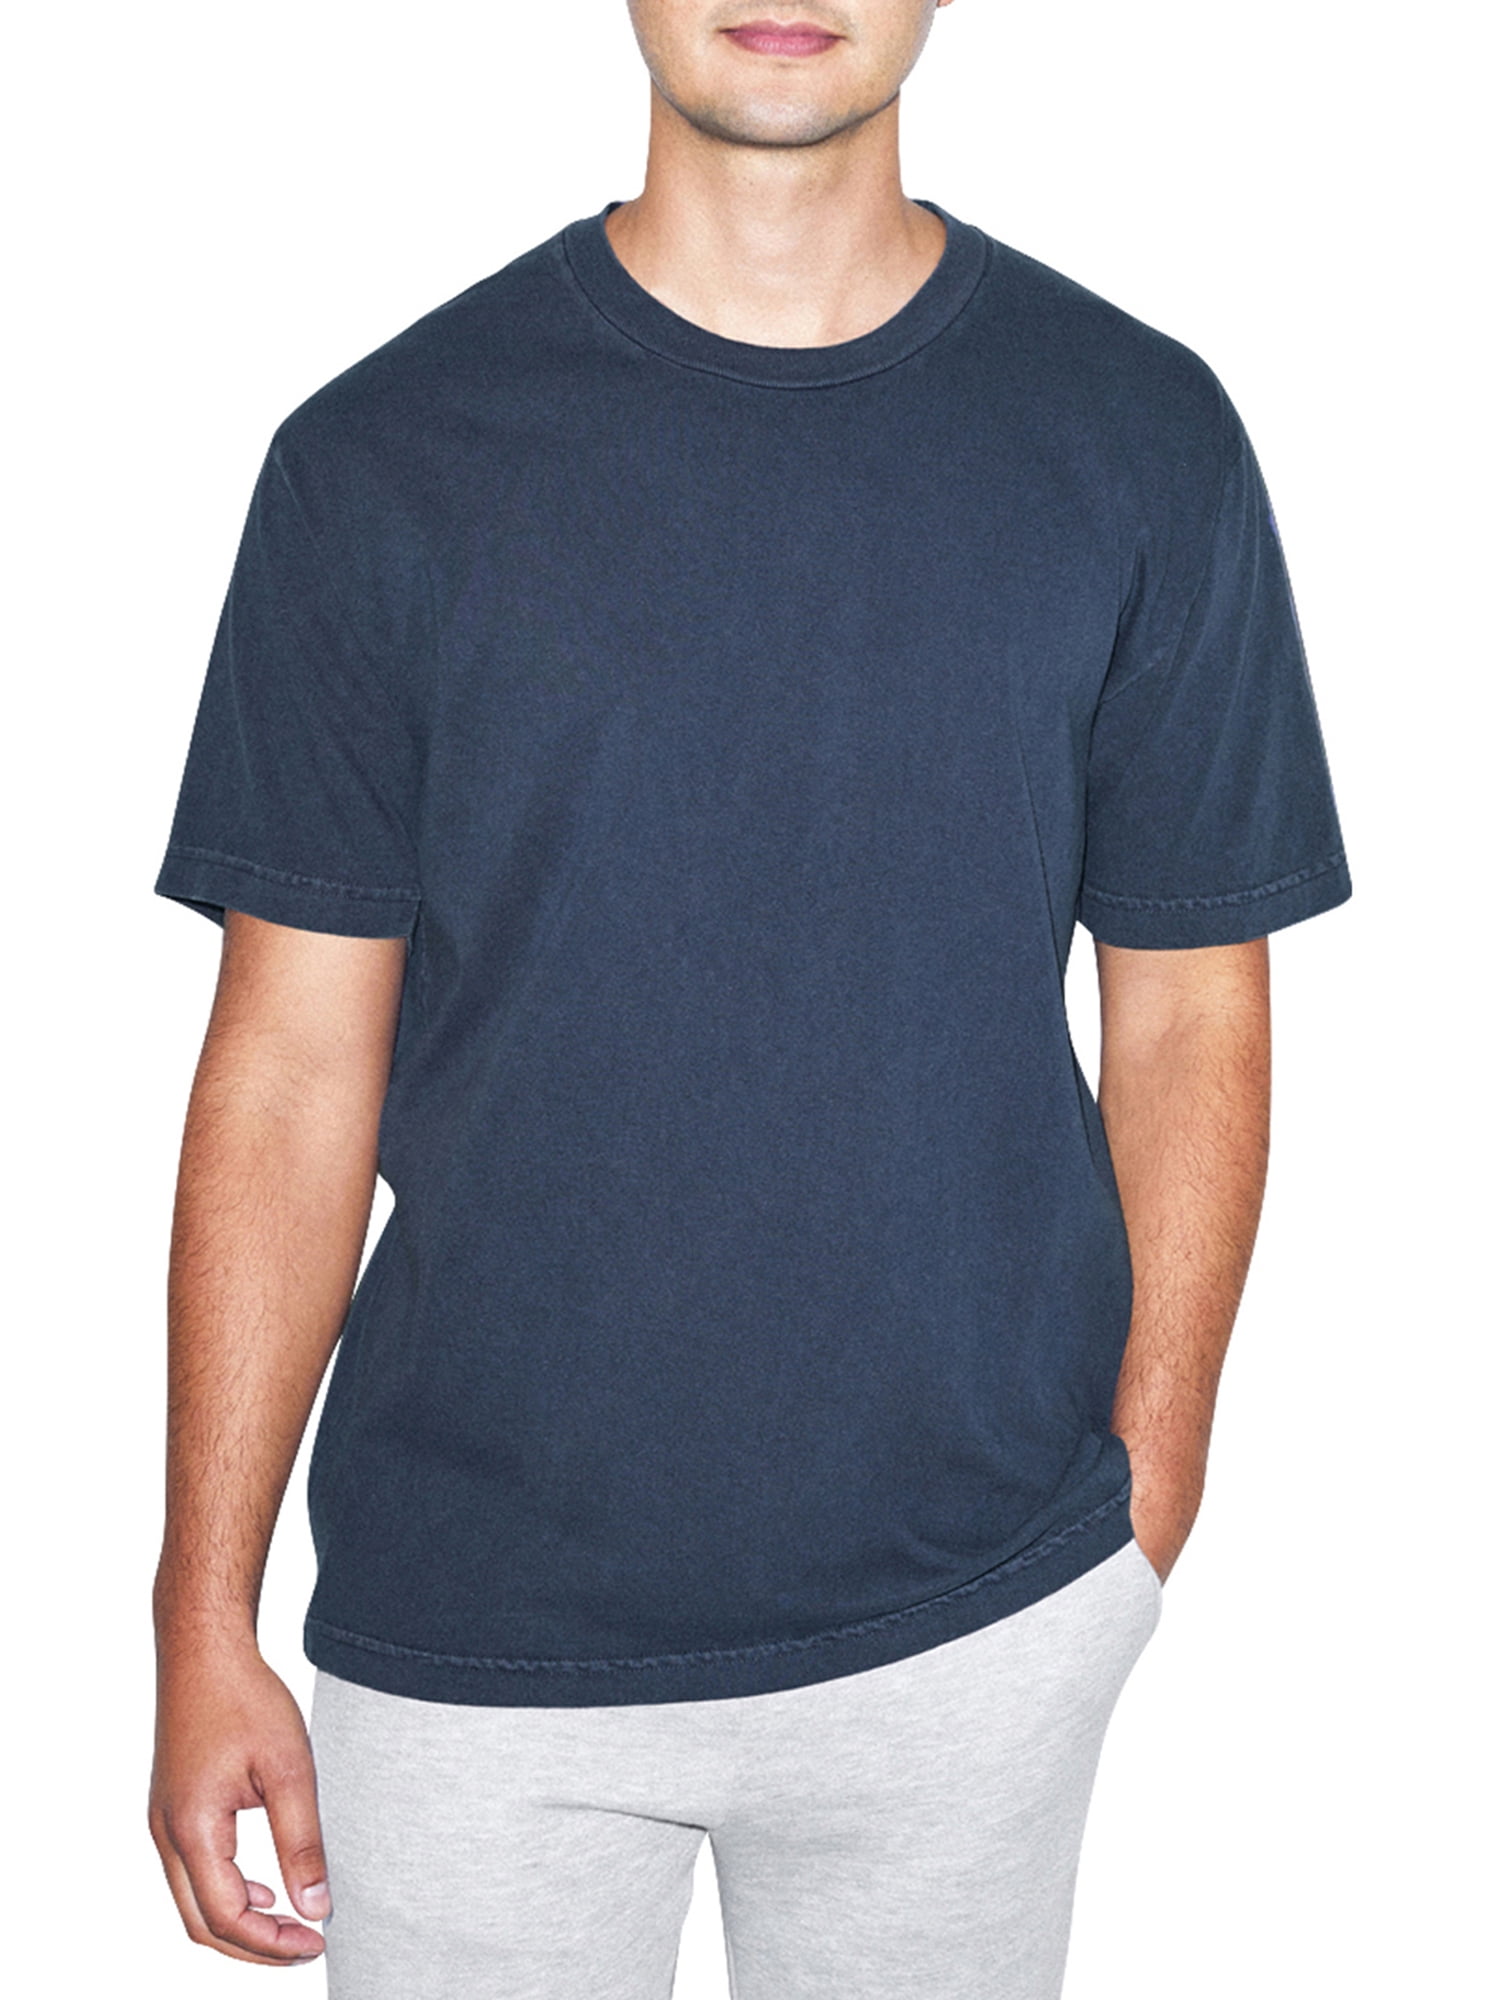 Men's Striped Basic Workout Crew Neck Short Sleeve Pocket T-Shirt Tee S M L XL 